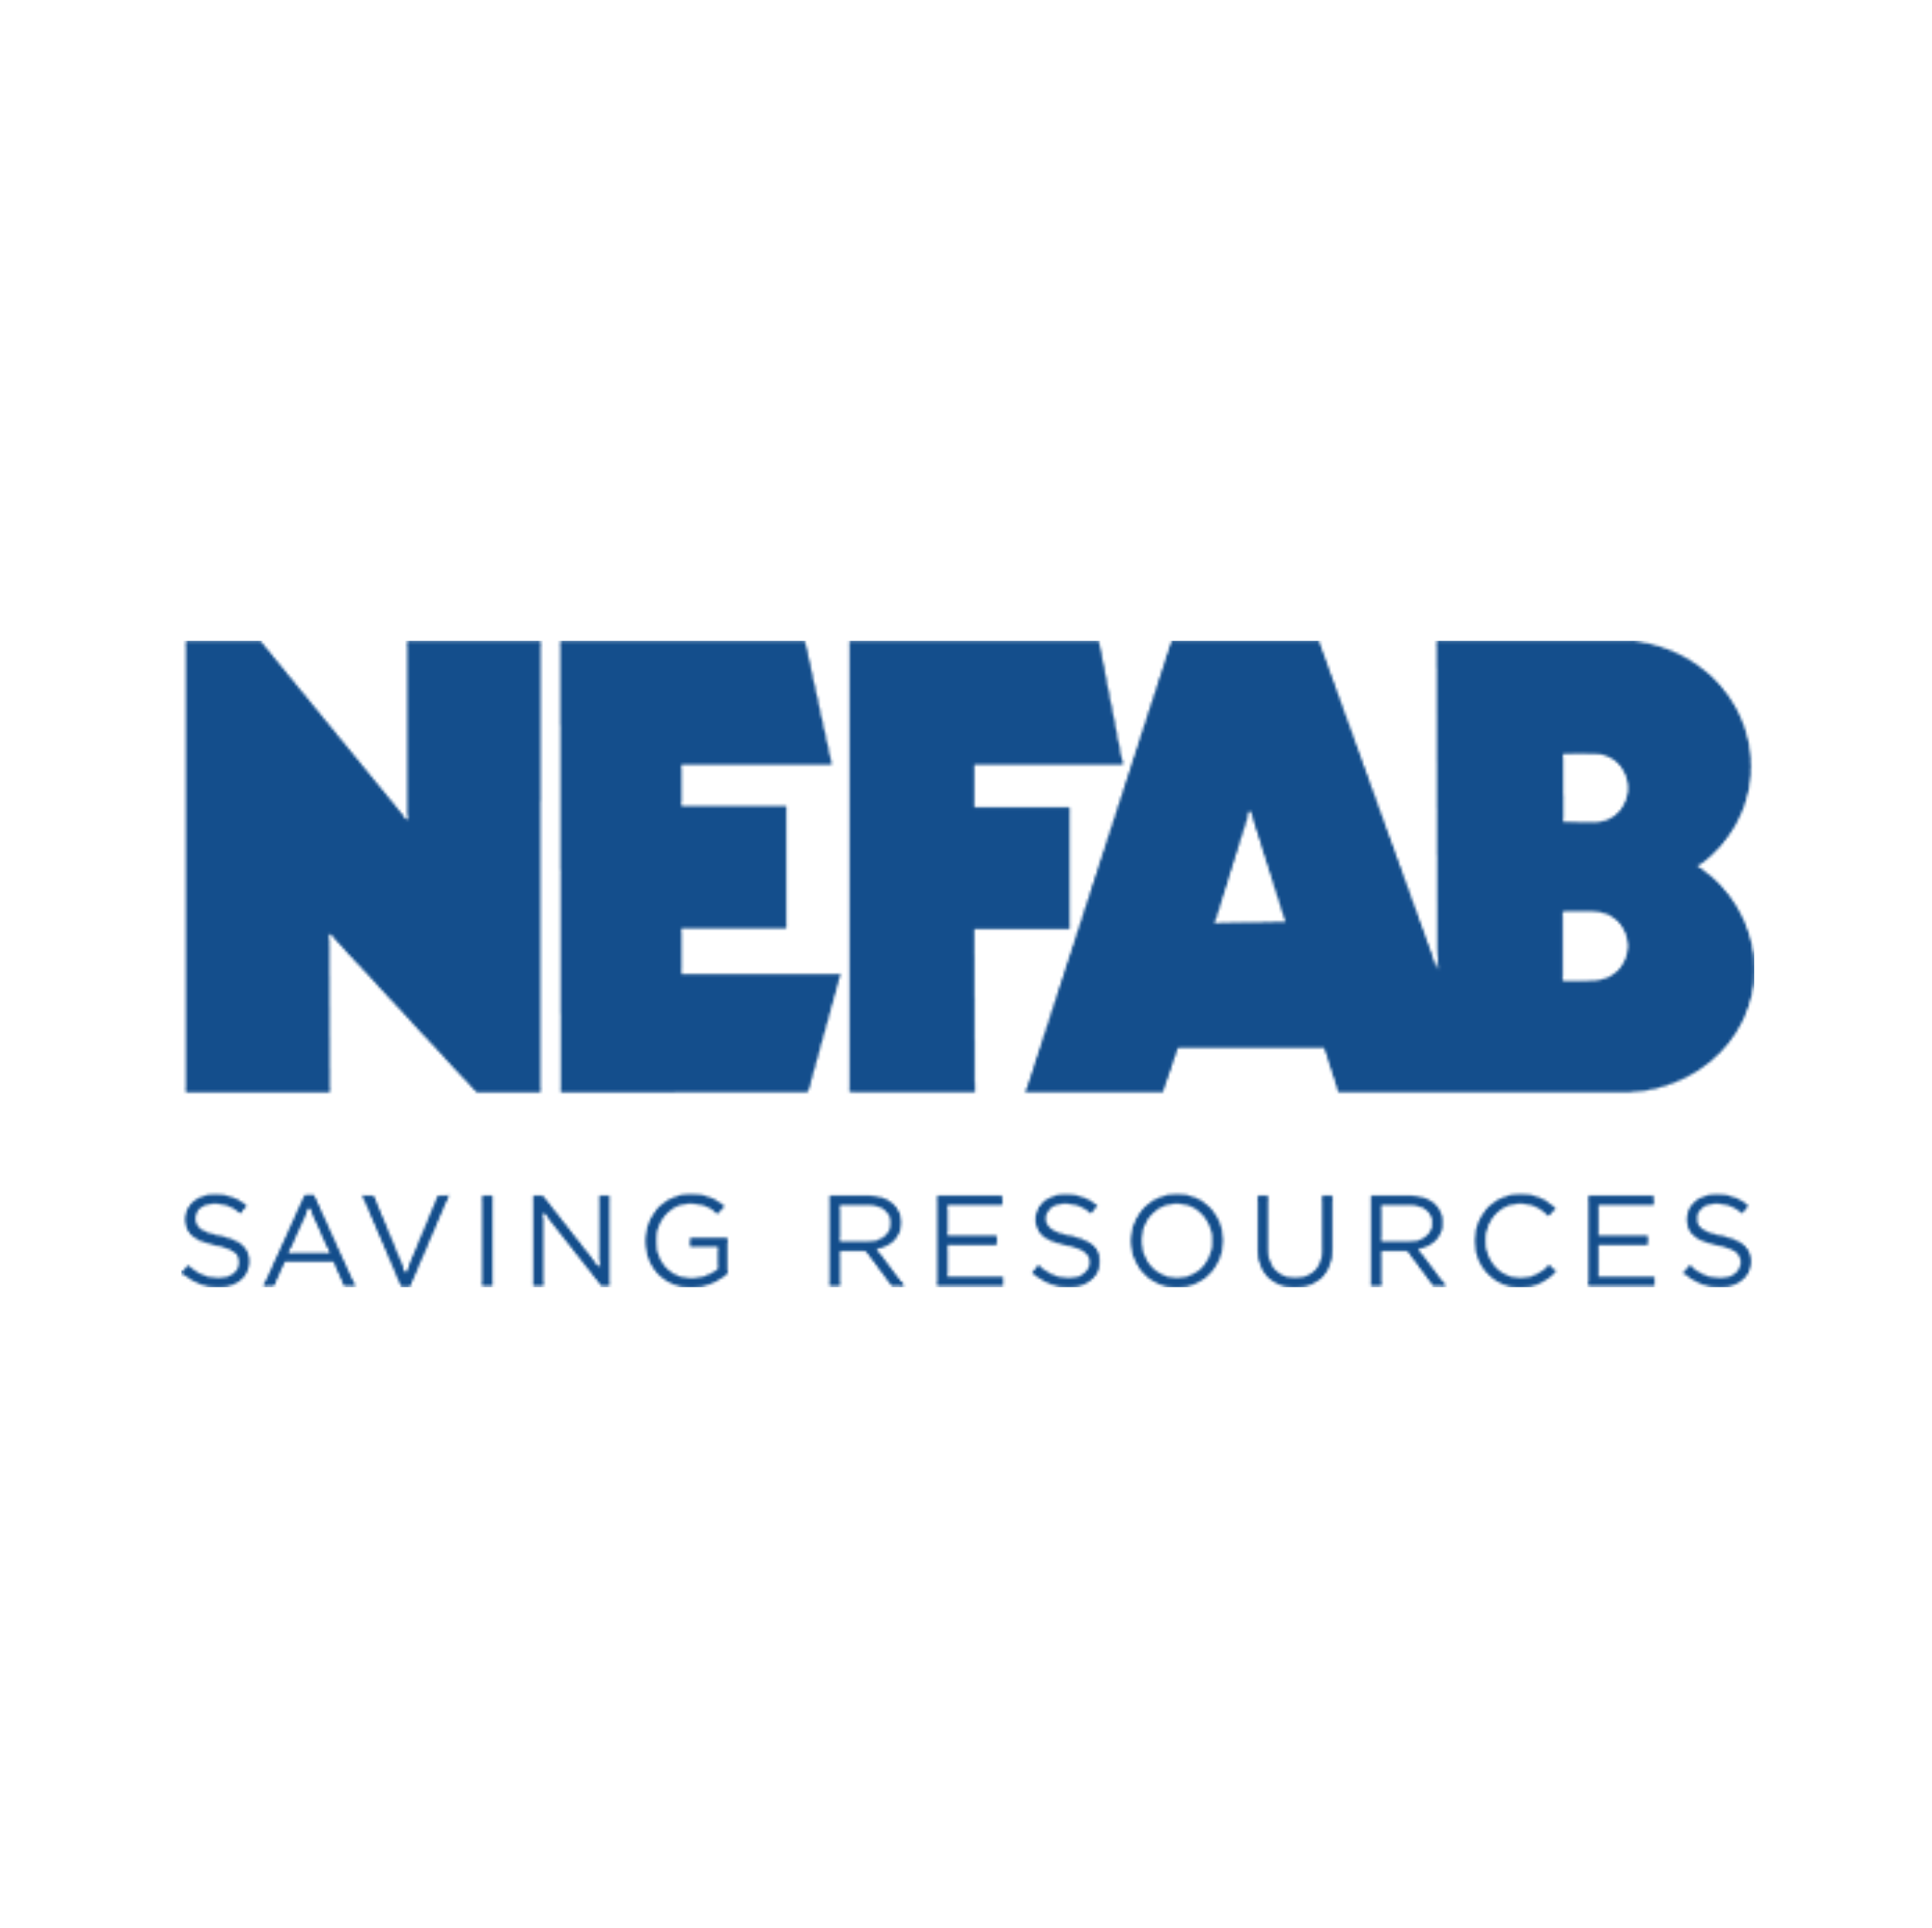 Nefab Logo